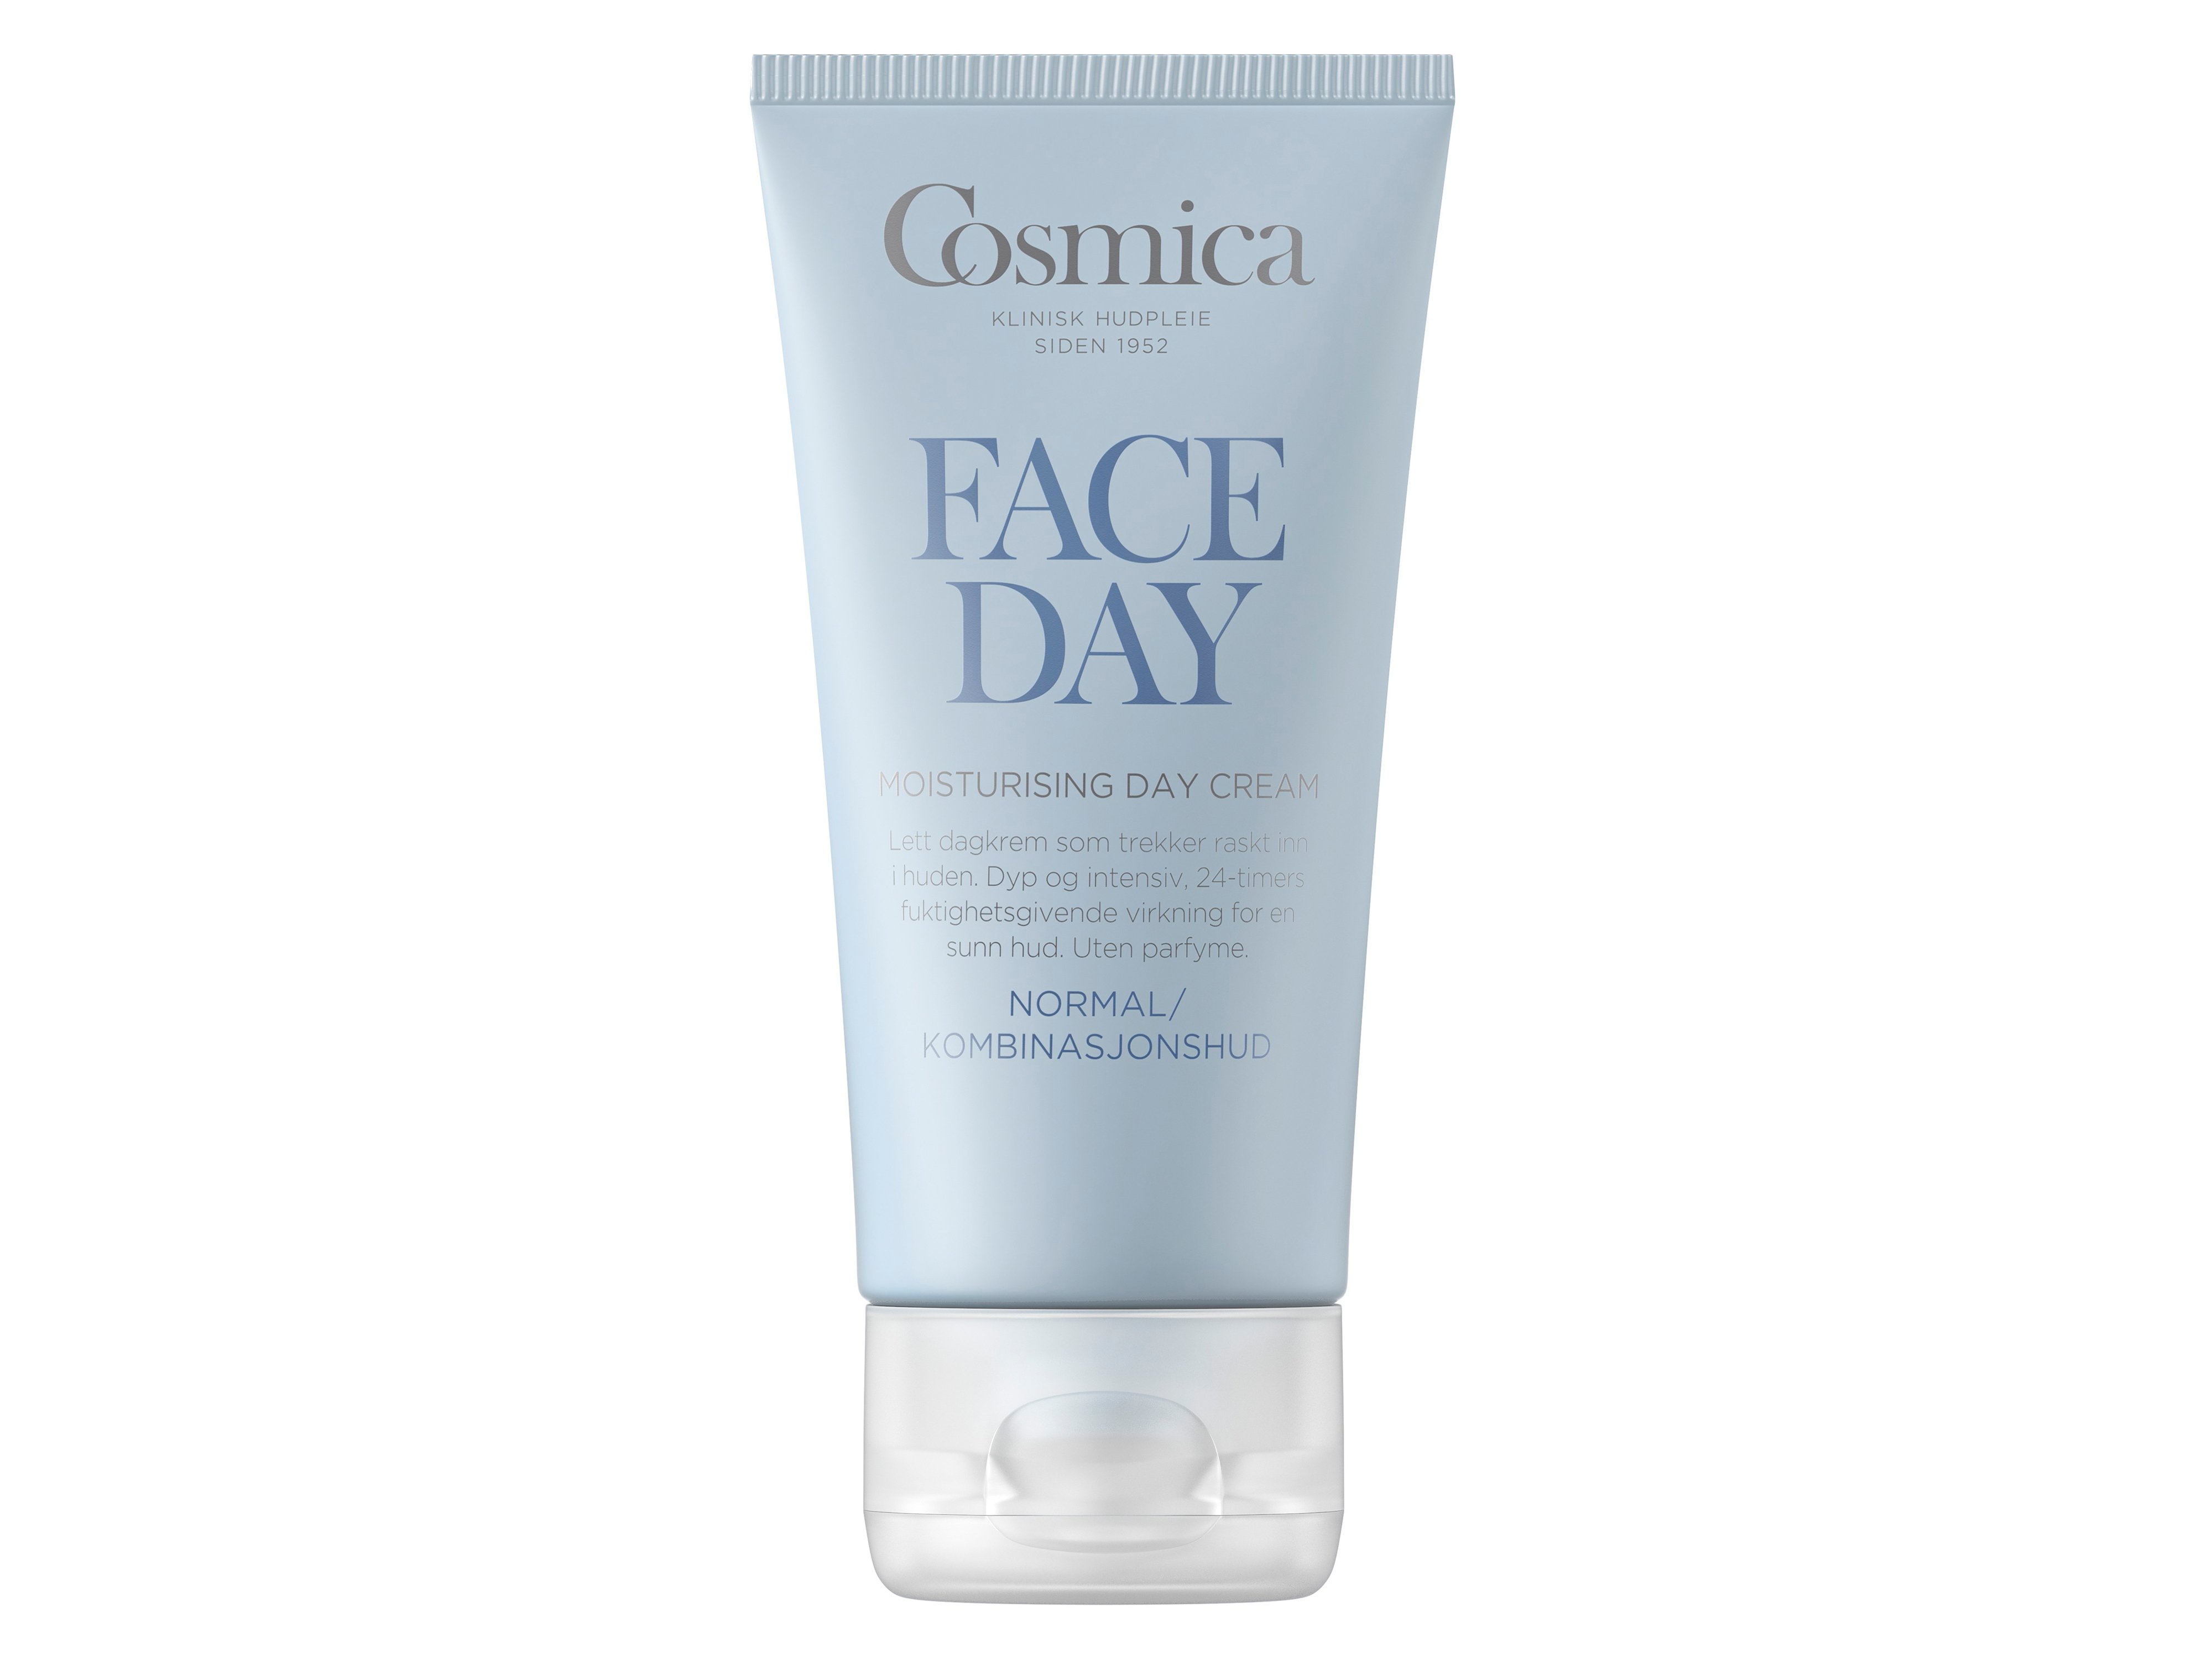 Cosmica Face Moisturising Day Cream, 50 ml